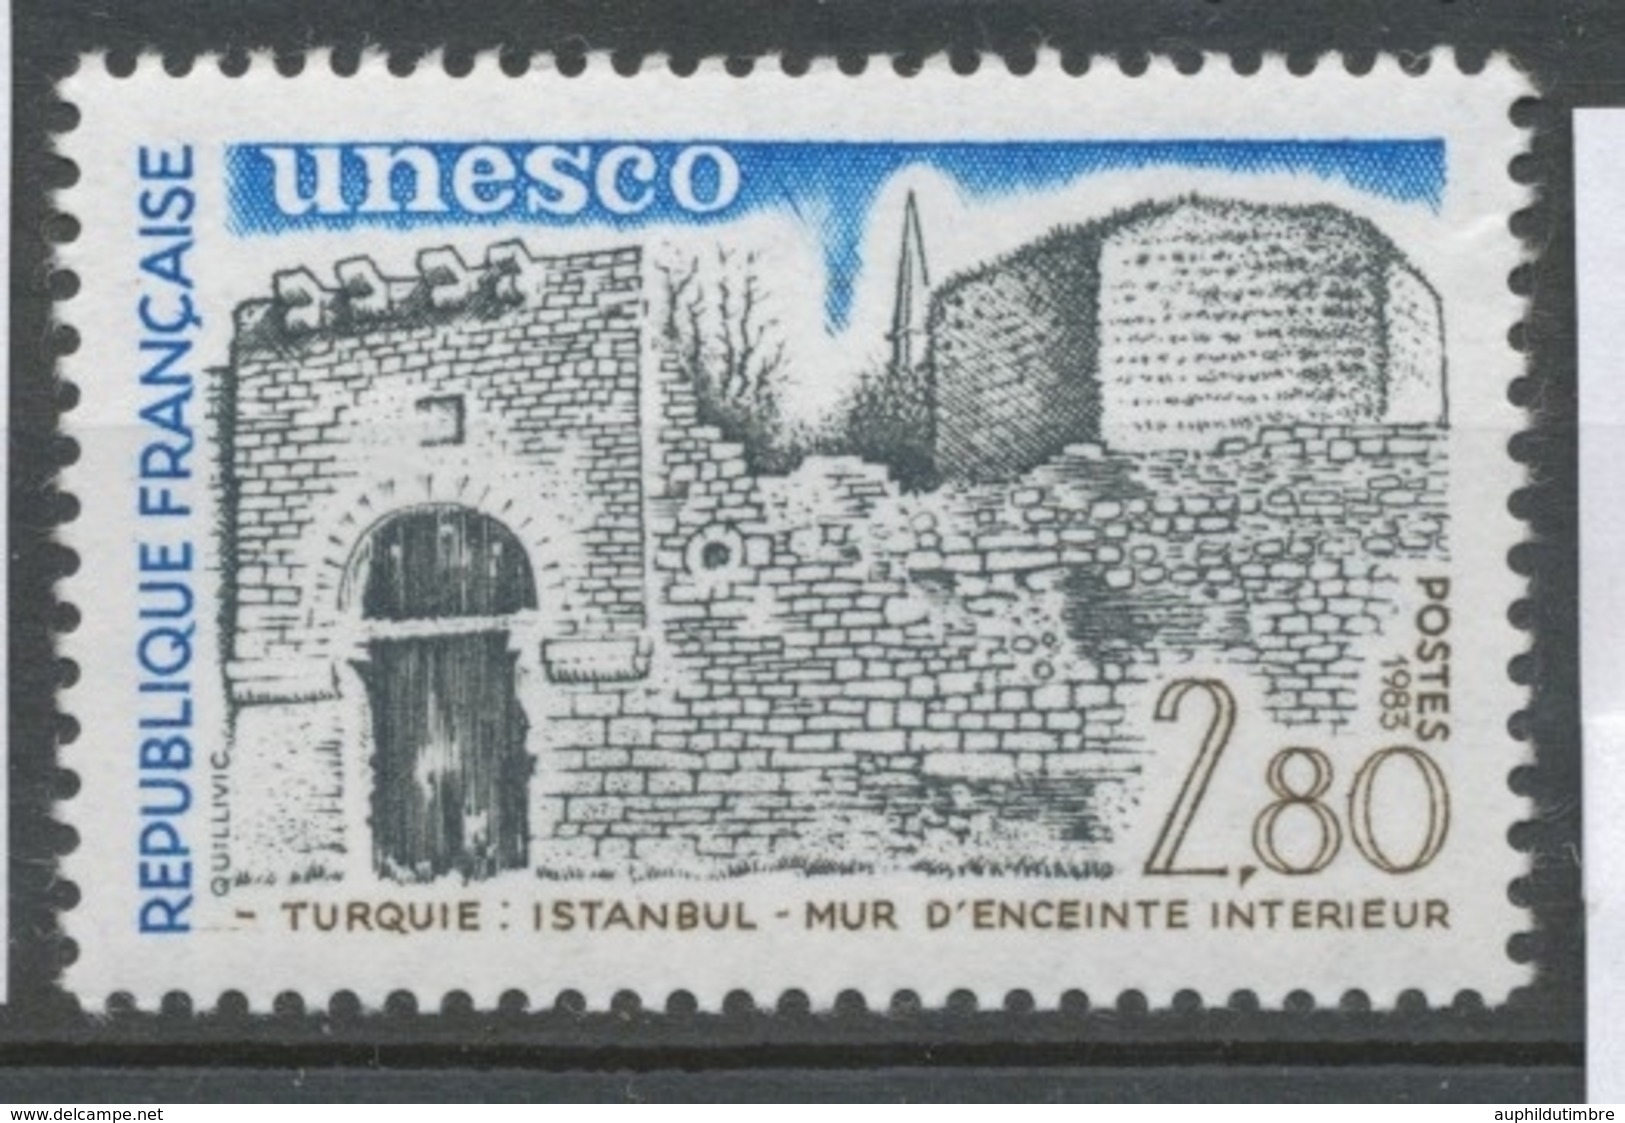 Service N°76 UNESCO Mur D'enceinte Istanbul - Turquie 2f80 ZS76 - Neufs